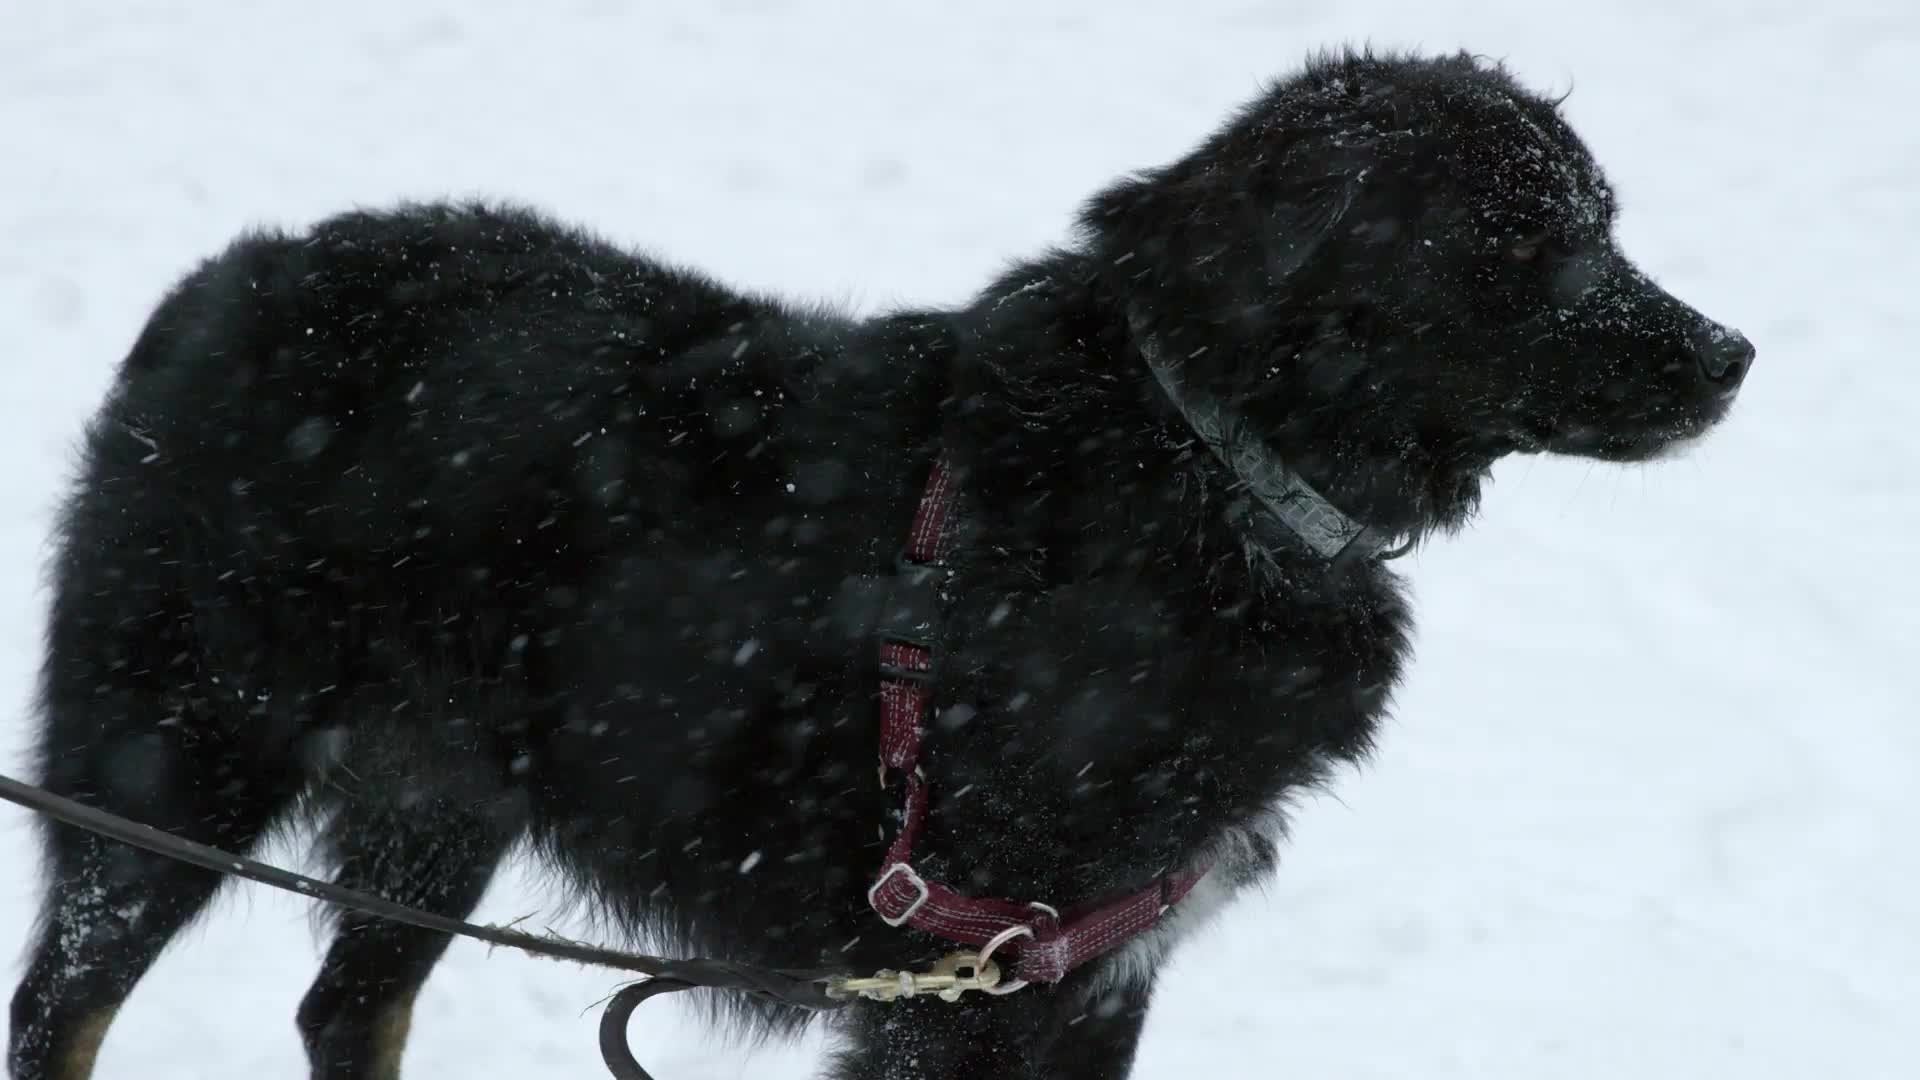 black dog in snow storm - winter blizzard - on leash snowing in 4K slow motion